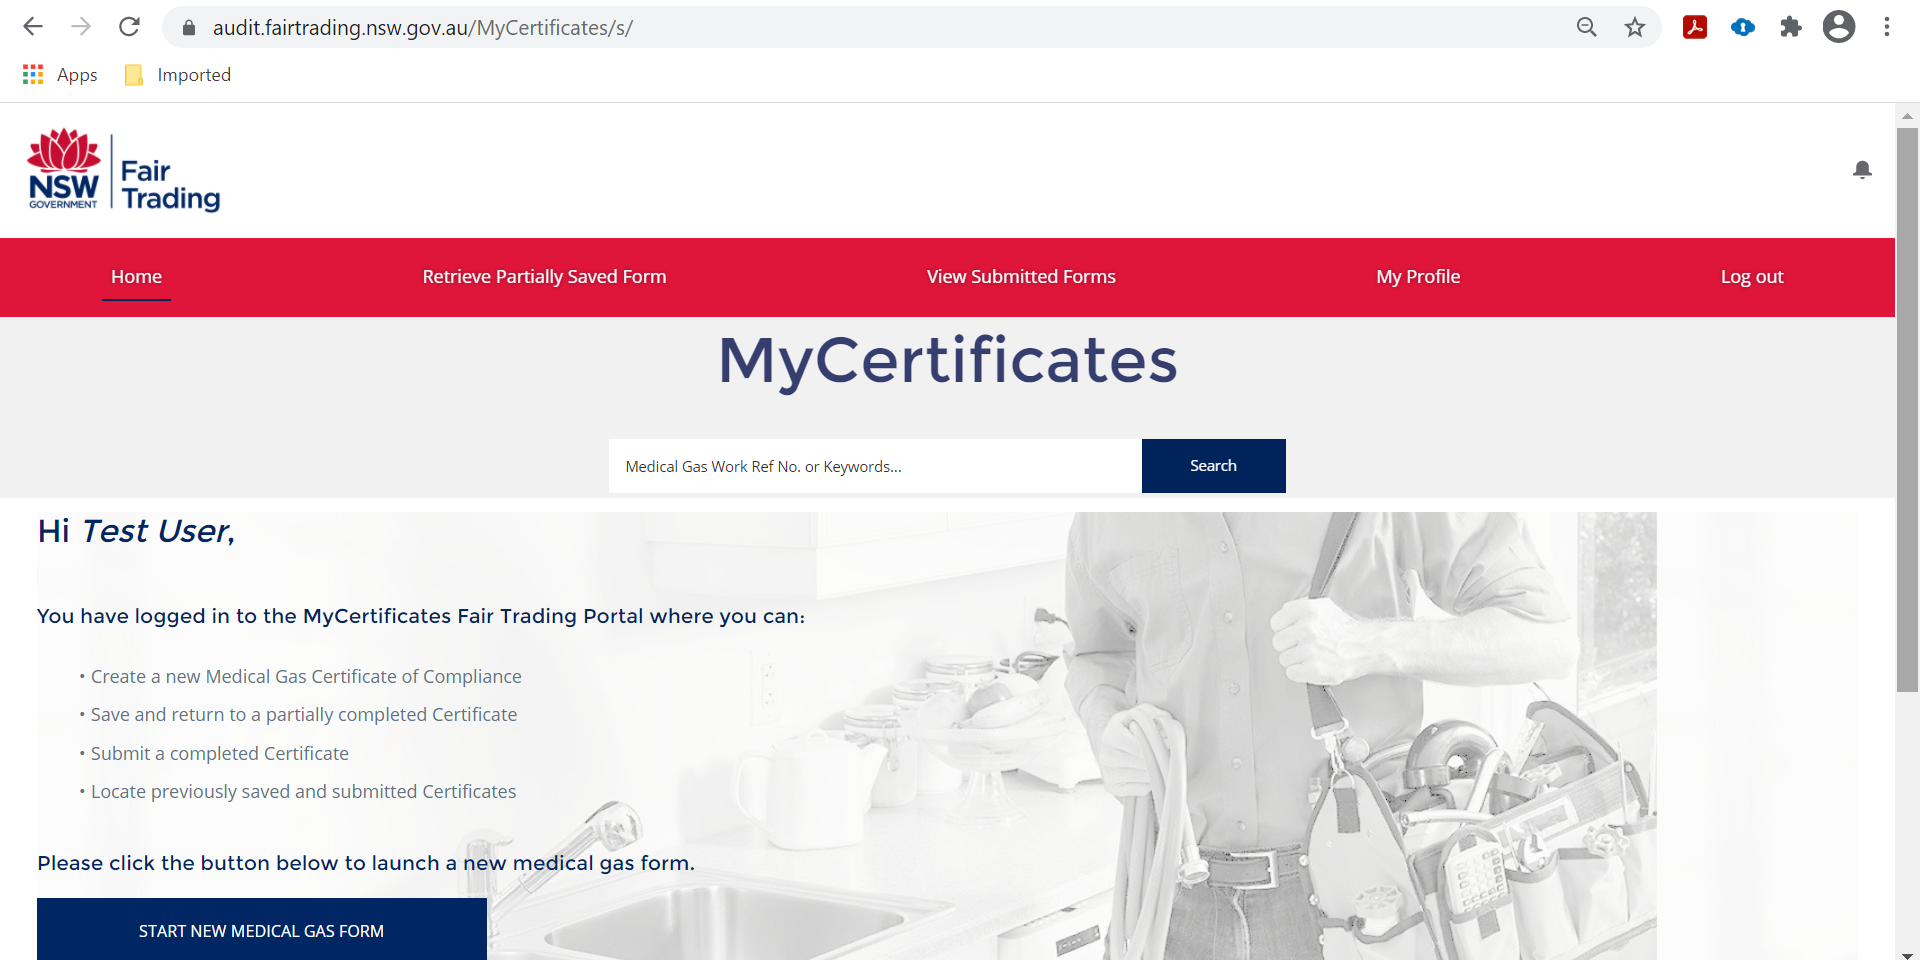 Image showing the MyCertificates login page